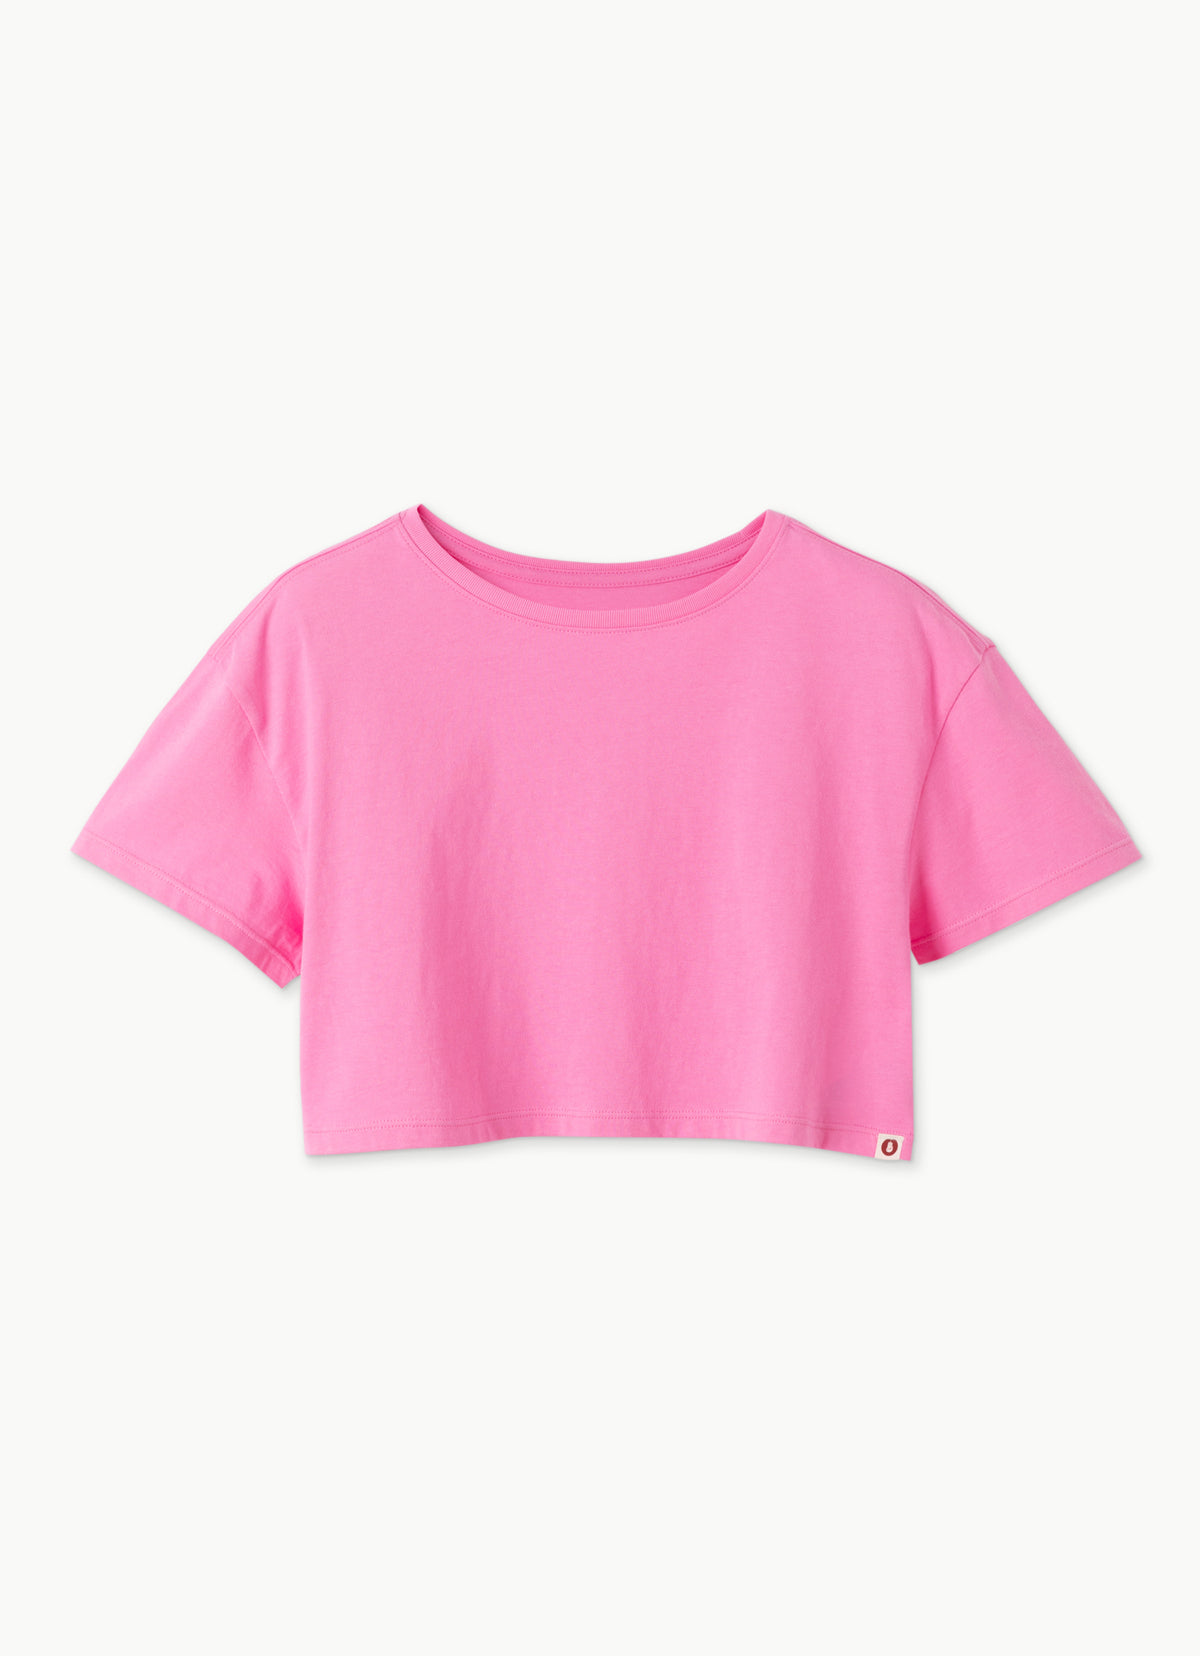 Kona short sleeve #2_Pink